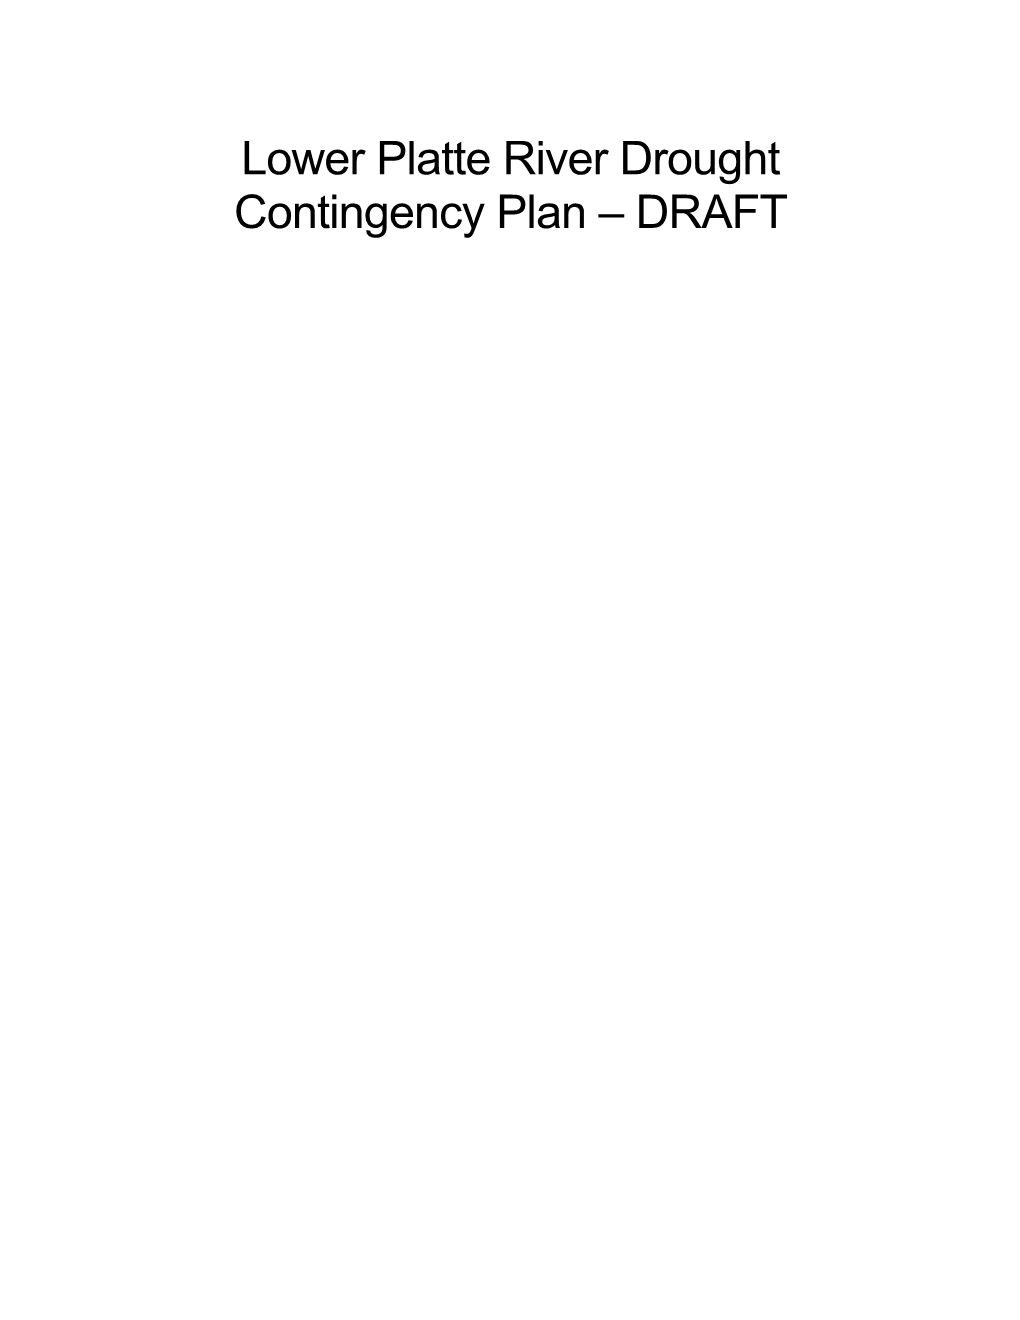 Lower Platte River Drought Contingency Plan – DRAFT Lower Platte River Drought Contingency Plan – DRAFT Executive Summary Executive Summary